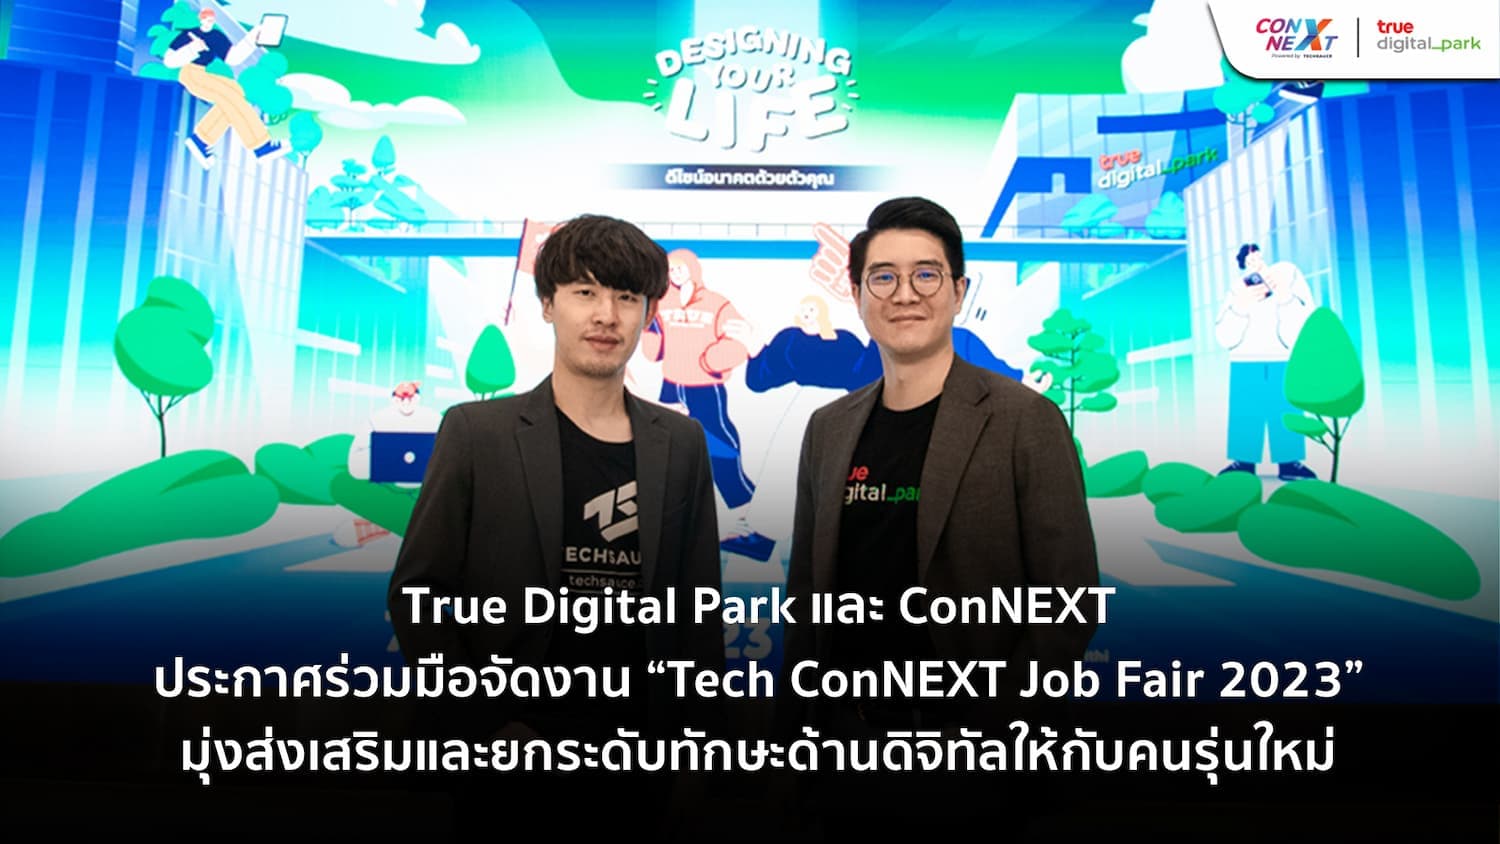 True Digital Park และ ConNEXT ประกาศร่วมมือจัดงาน “Tech ConNEXT Job Fair 2023